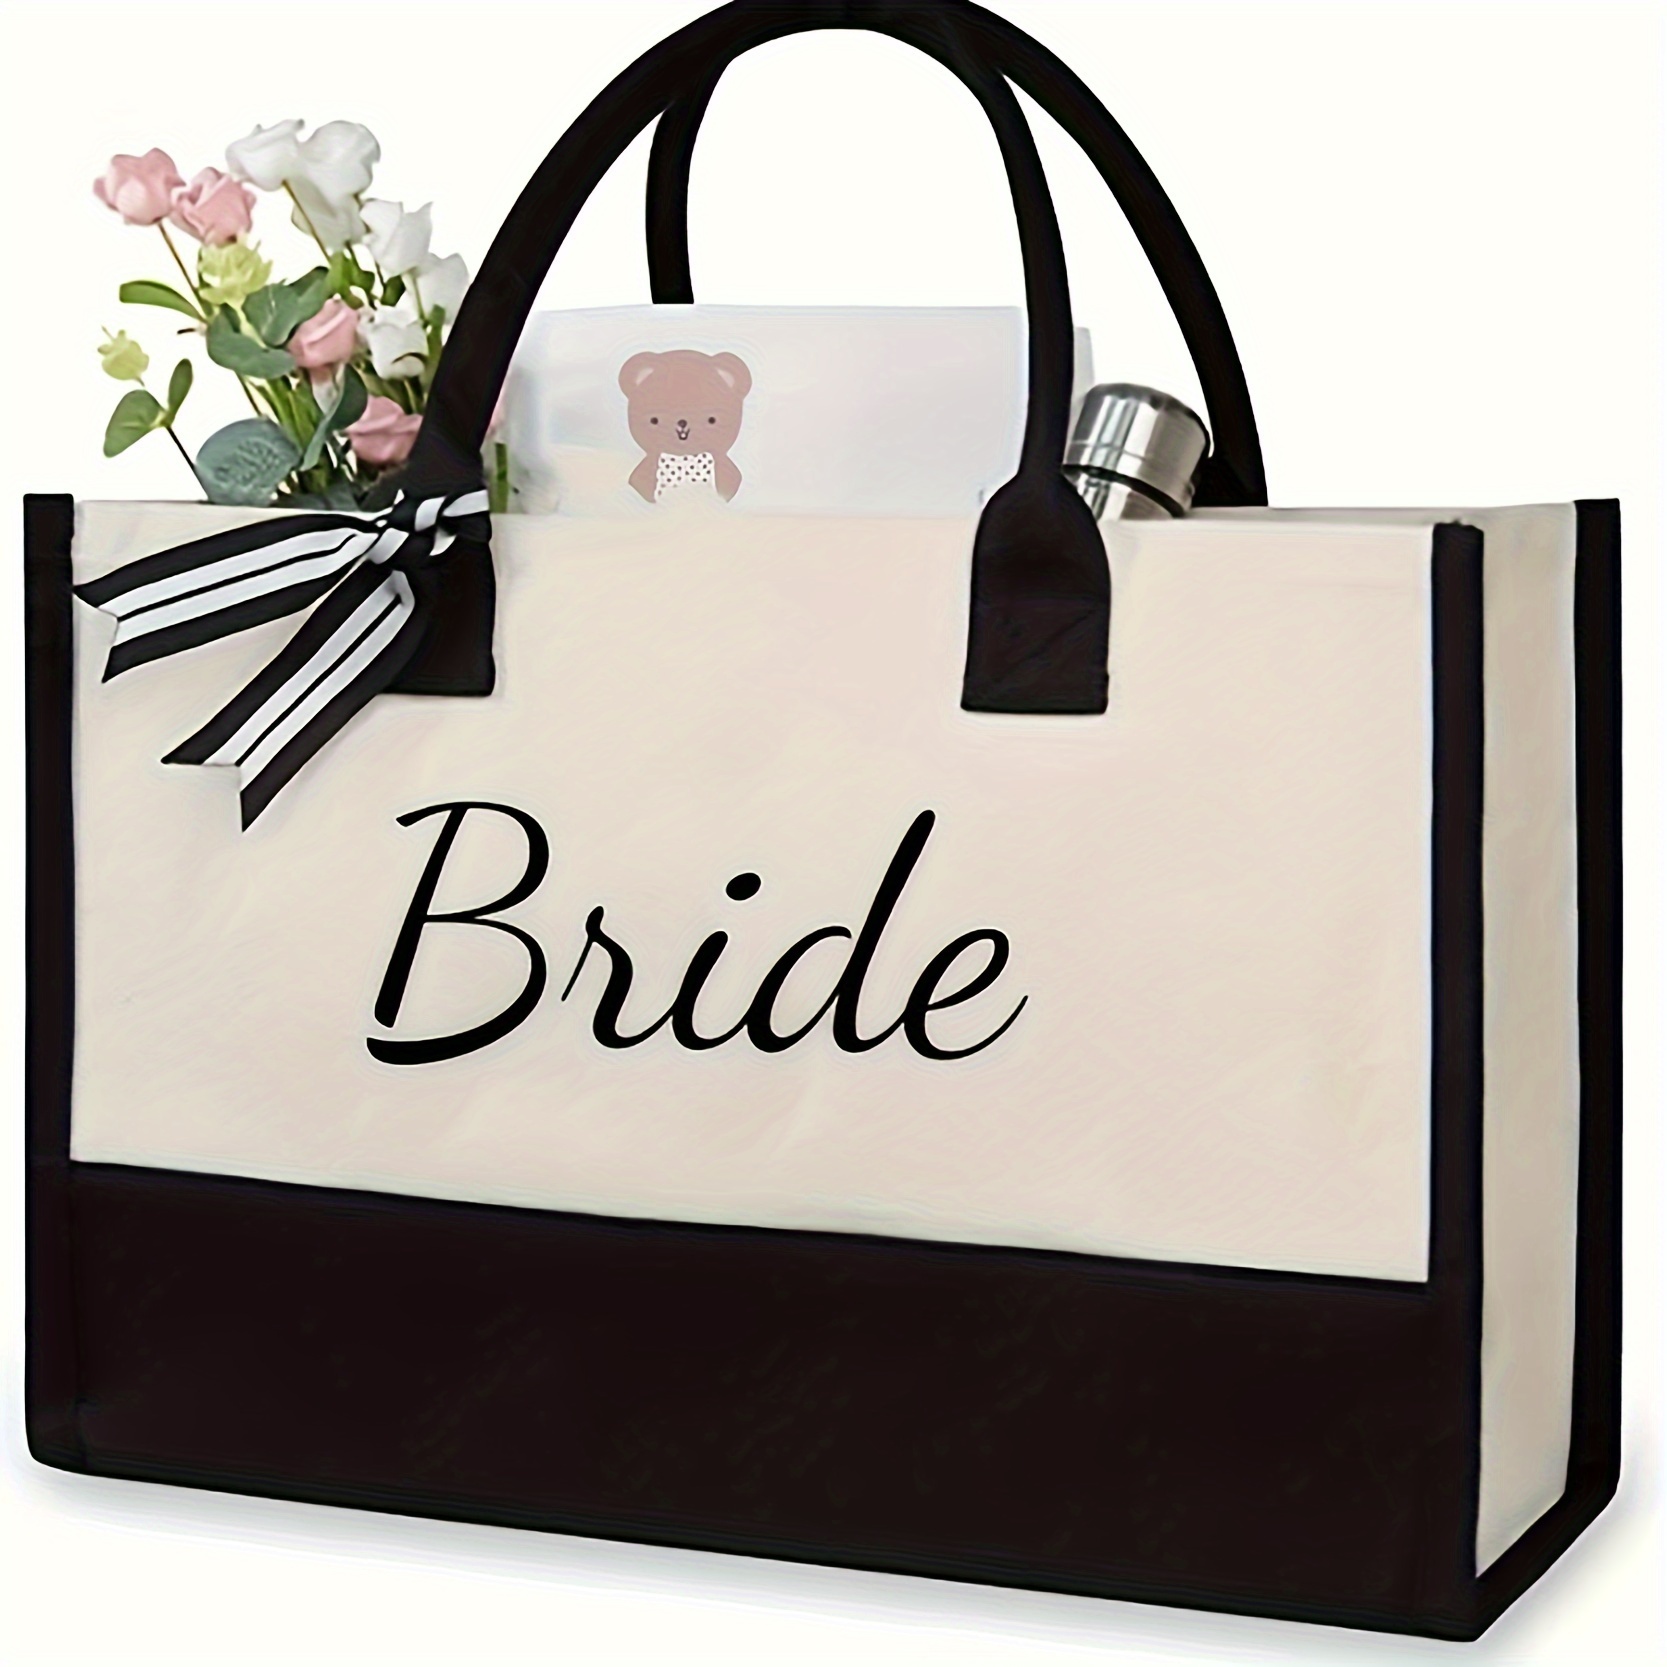 

Simple Bride Print Tote Bag, Large Capacity Gift Bag, Women's Casual Handbag For Work School Shopping Wedding